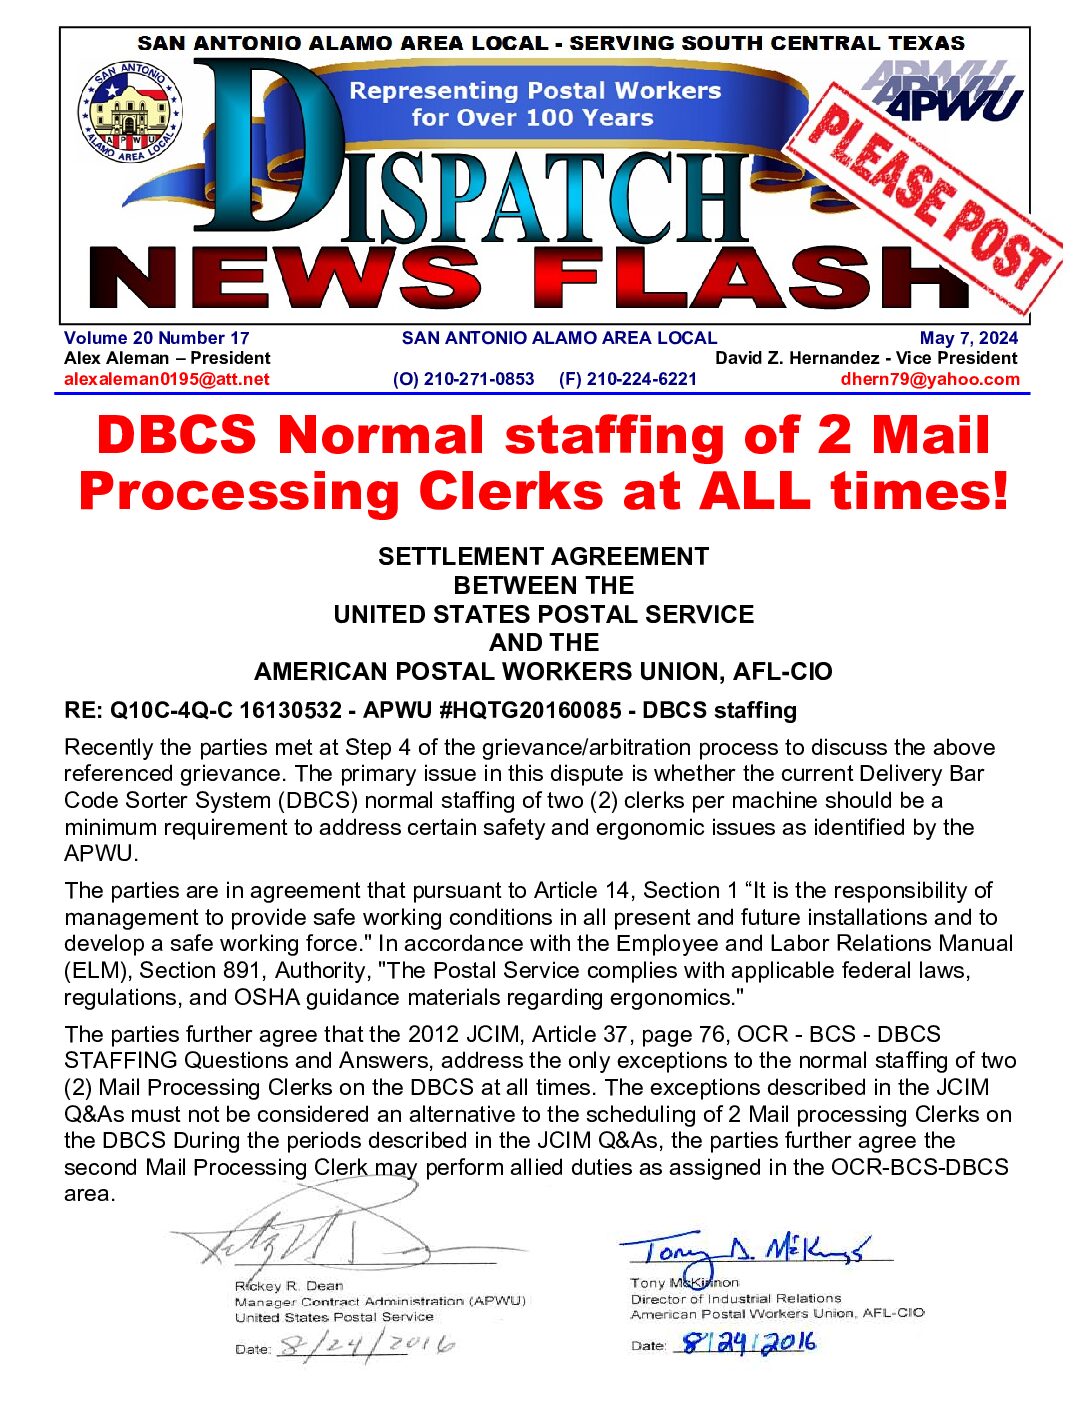 NewsFlash 20-17 DBCS Staffing - 